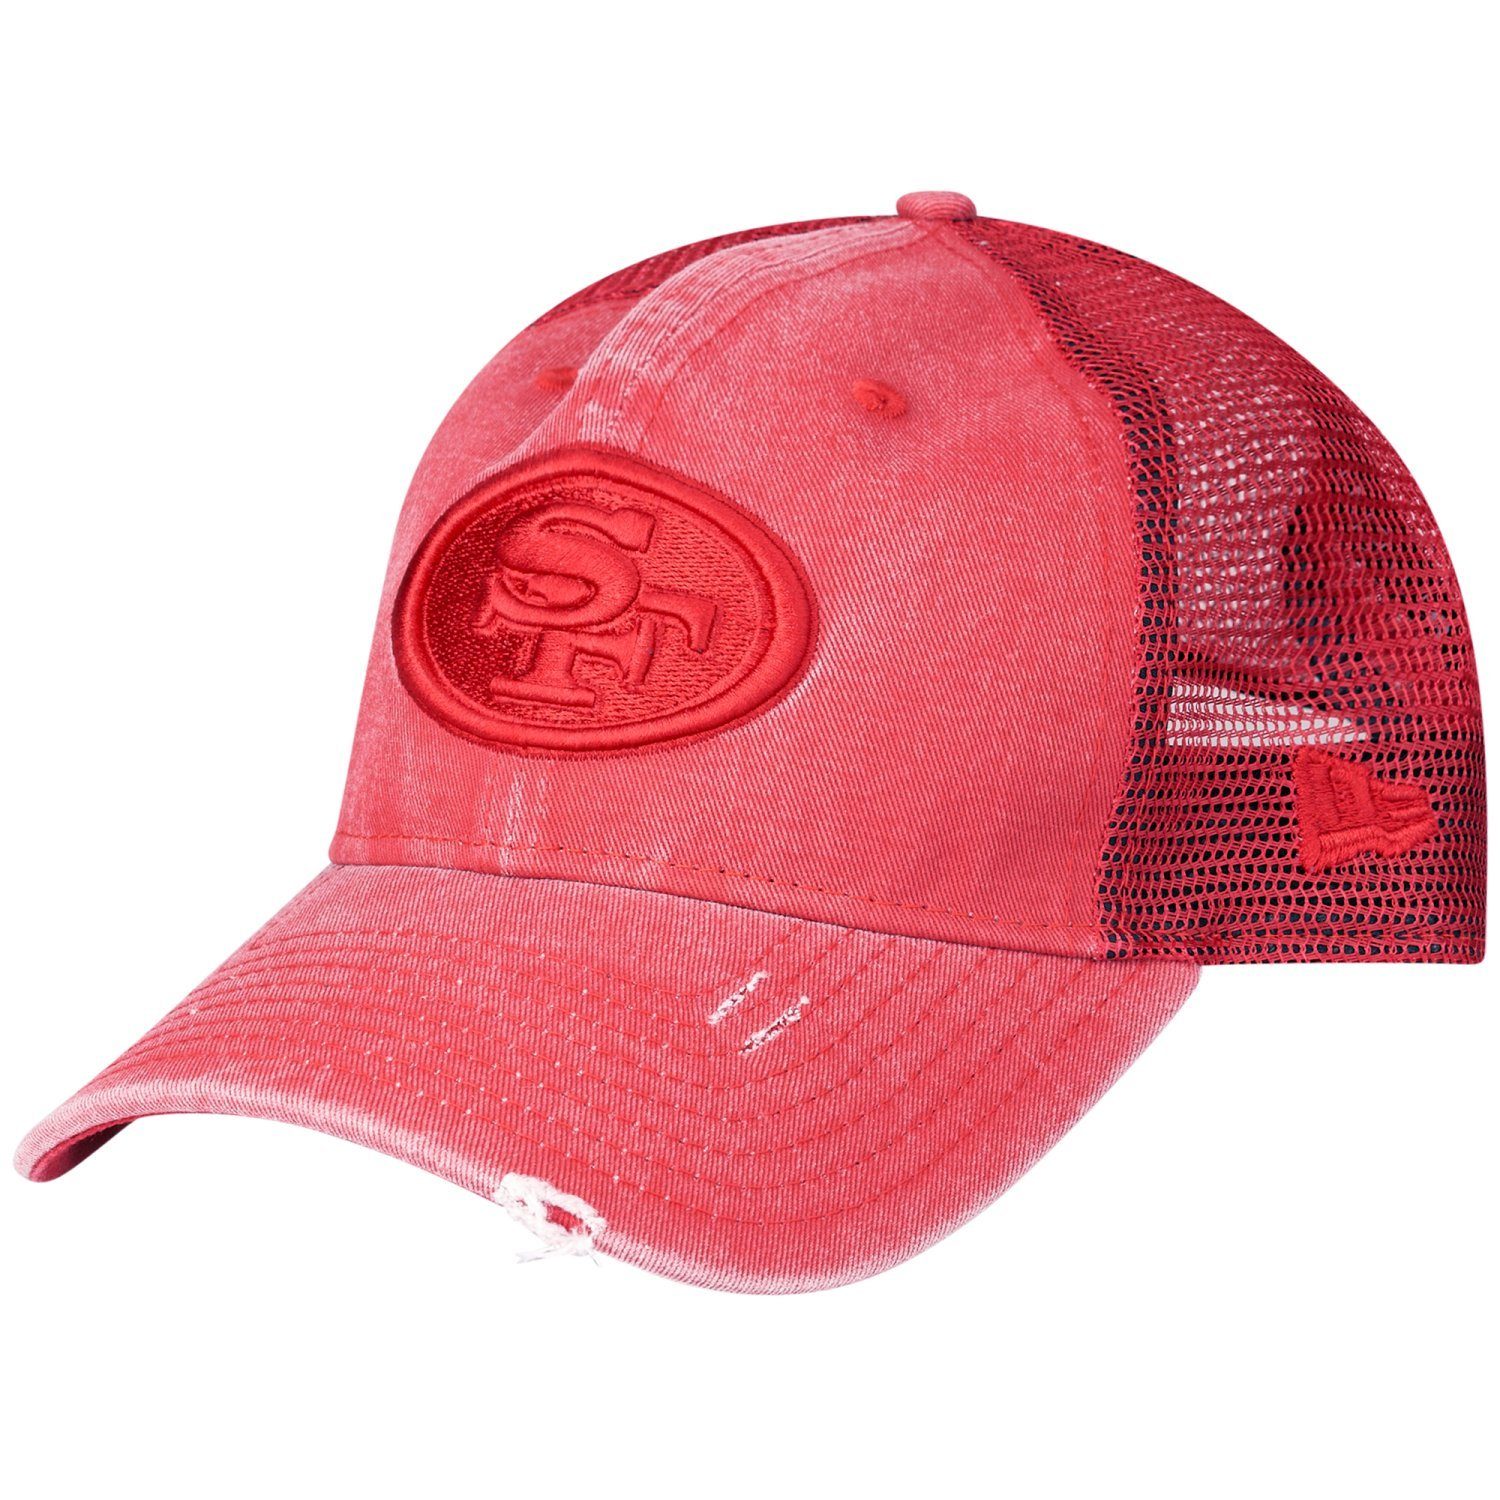 New Cap RED WASHEDLOOK Teams Trucker Trucker 9Twenty NFL 49ers San Francisco Era